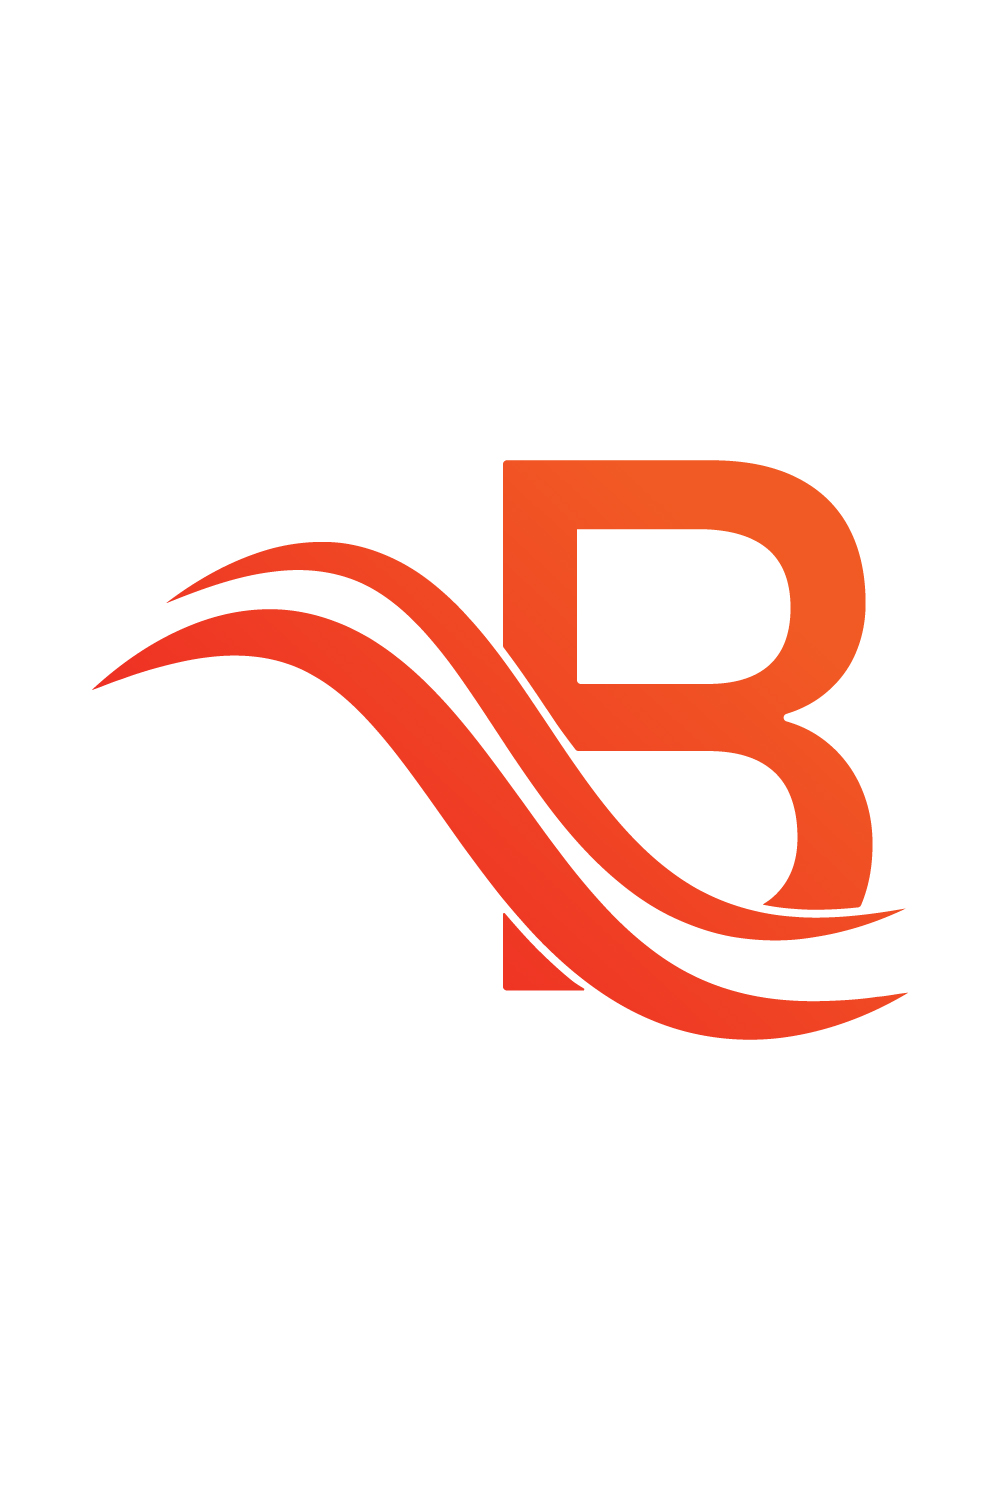 Initials B letter logo design vector images B logo design template vector icon illustration B logo orange color, Premium vector best company identity pinterest preview image.